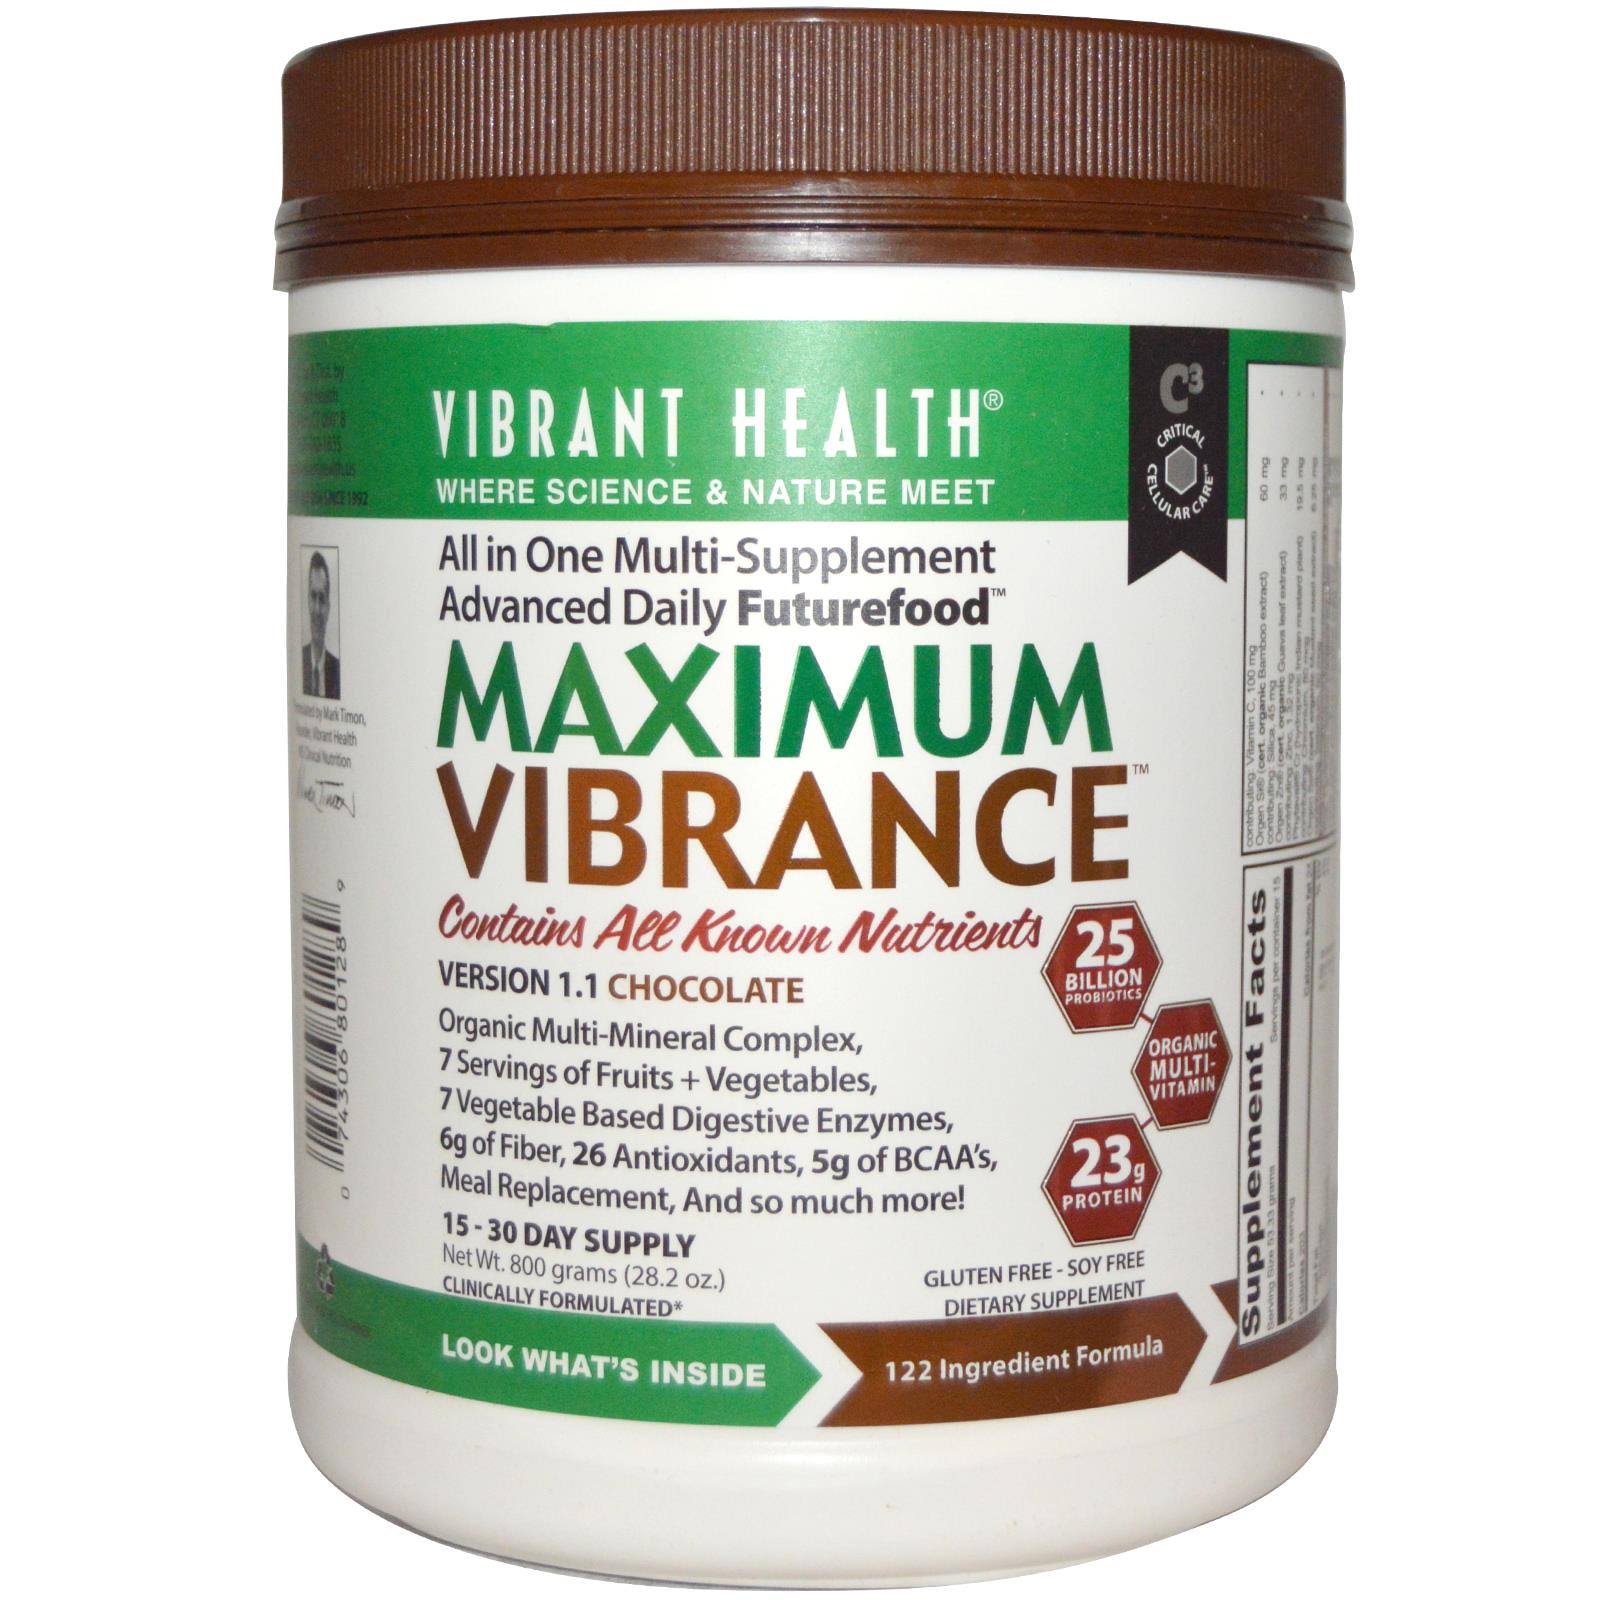 Vibrant Health Maximum Vibrance - Chocolate, 724.5g